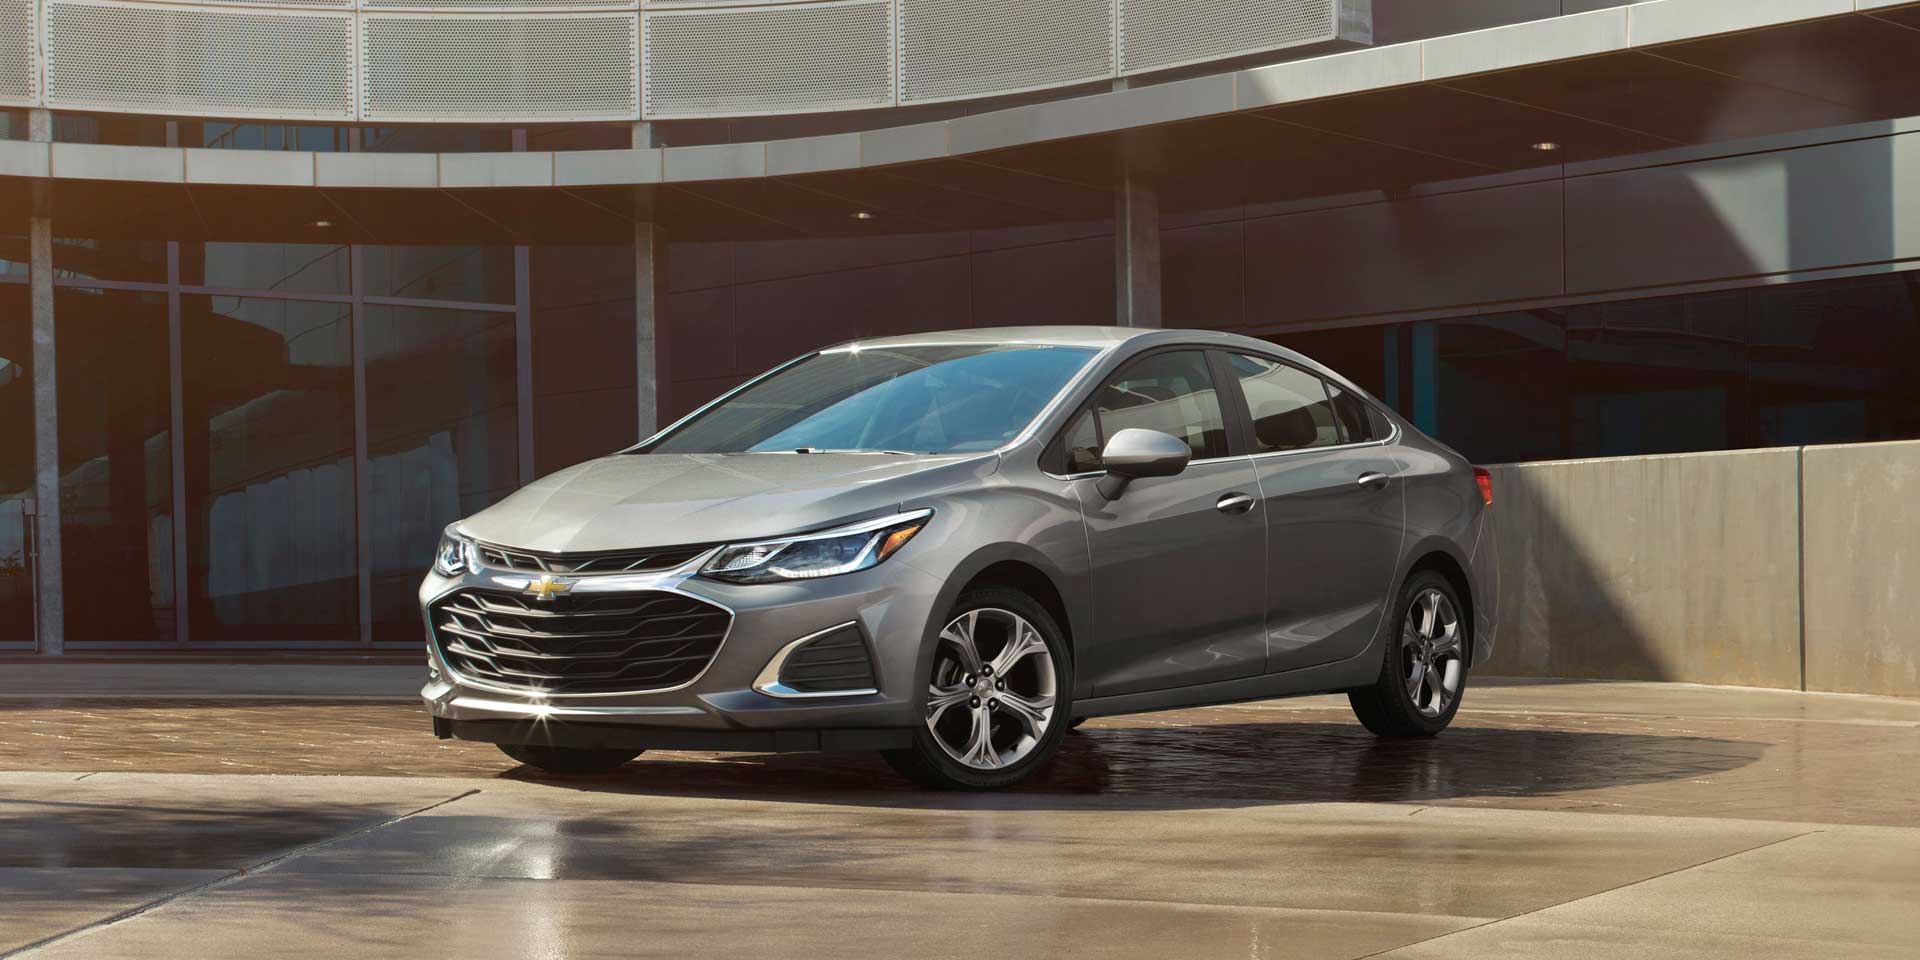 2019 - Chevrolet - Cruze - Vehicles on Display | Chicago Auto Show